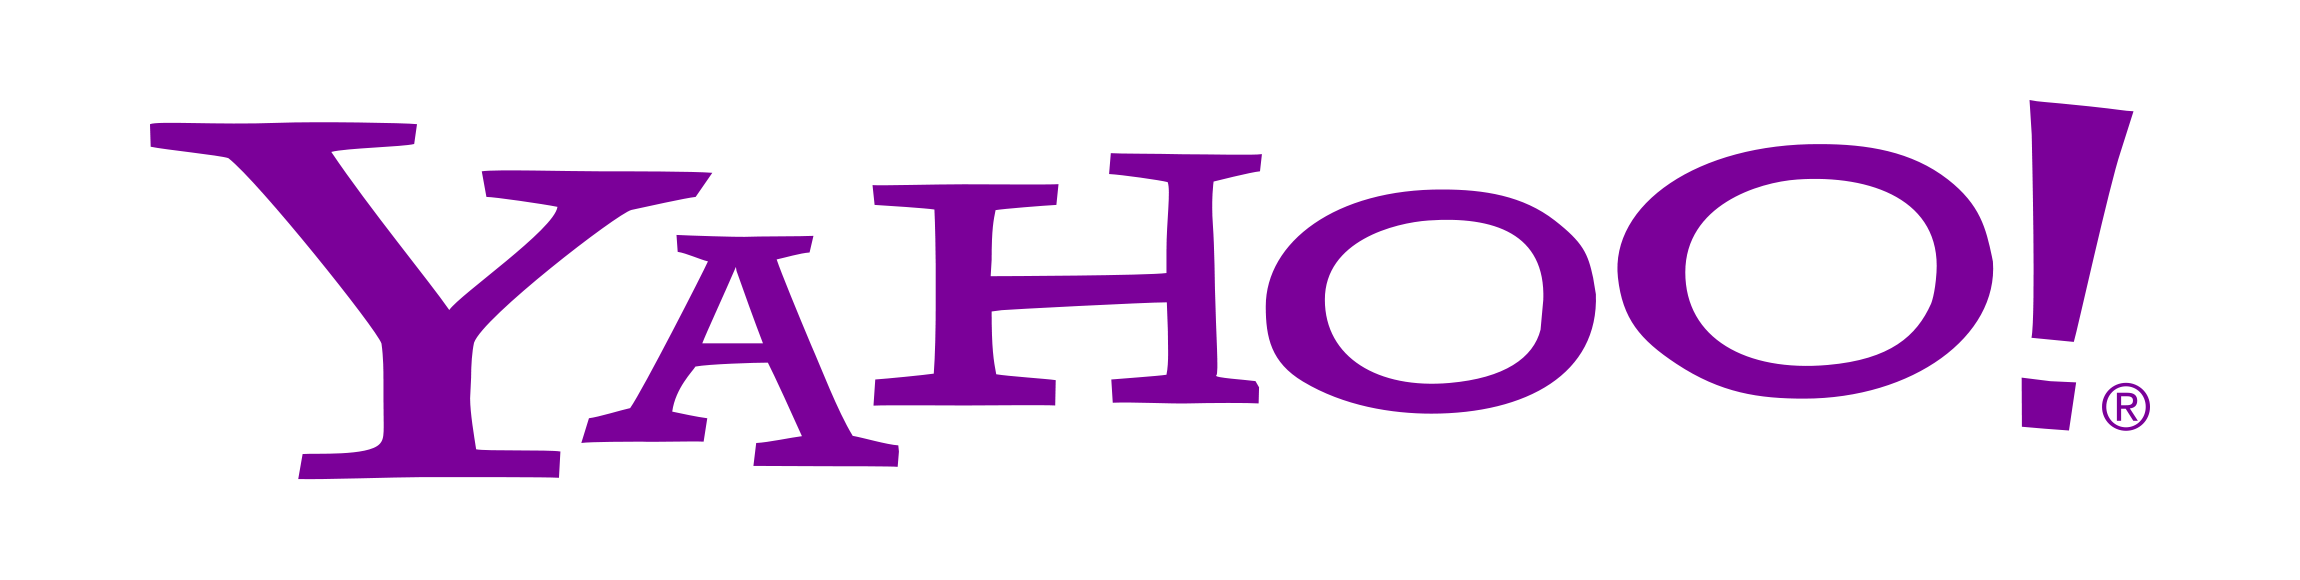 Famous Purple Logo - Yahoo Logo, Yahoo Symbol, Meaning, History and Evolution